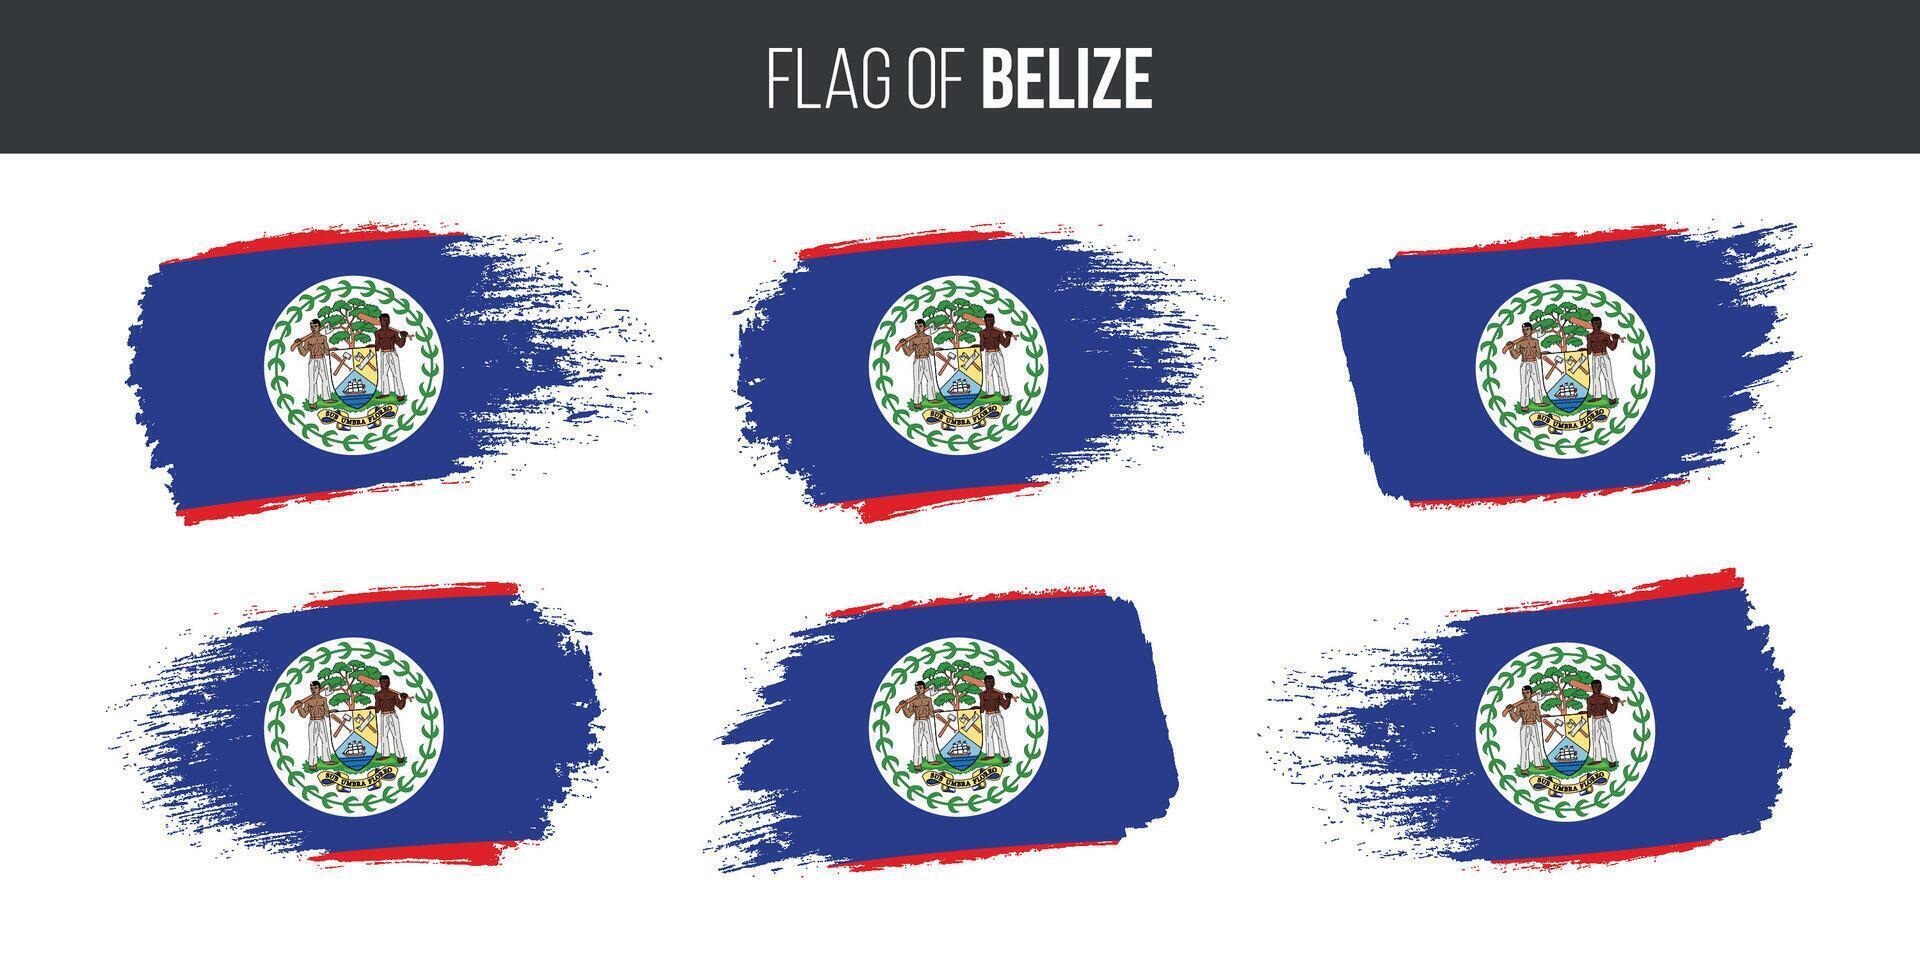 Belize flags set brush stroke grunge vector illustration flag of belize isolated on white